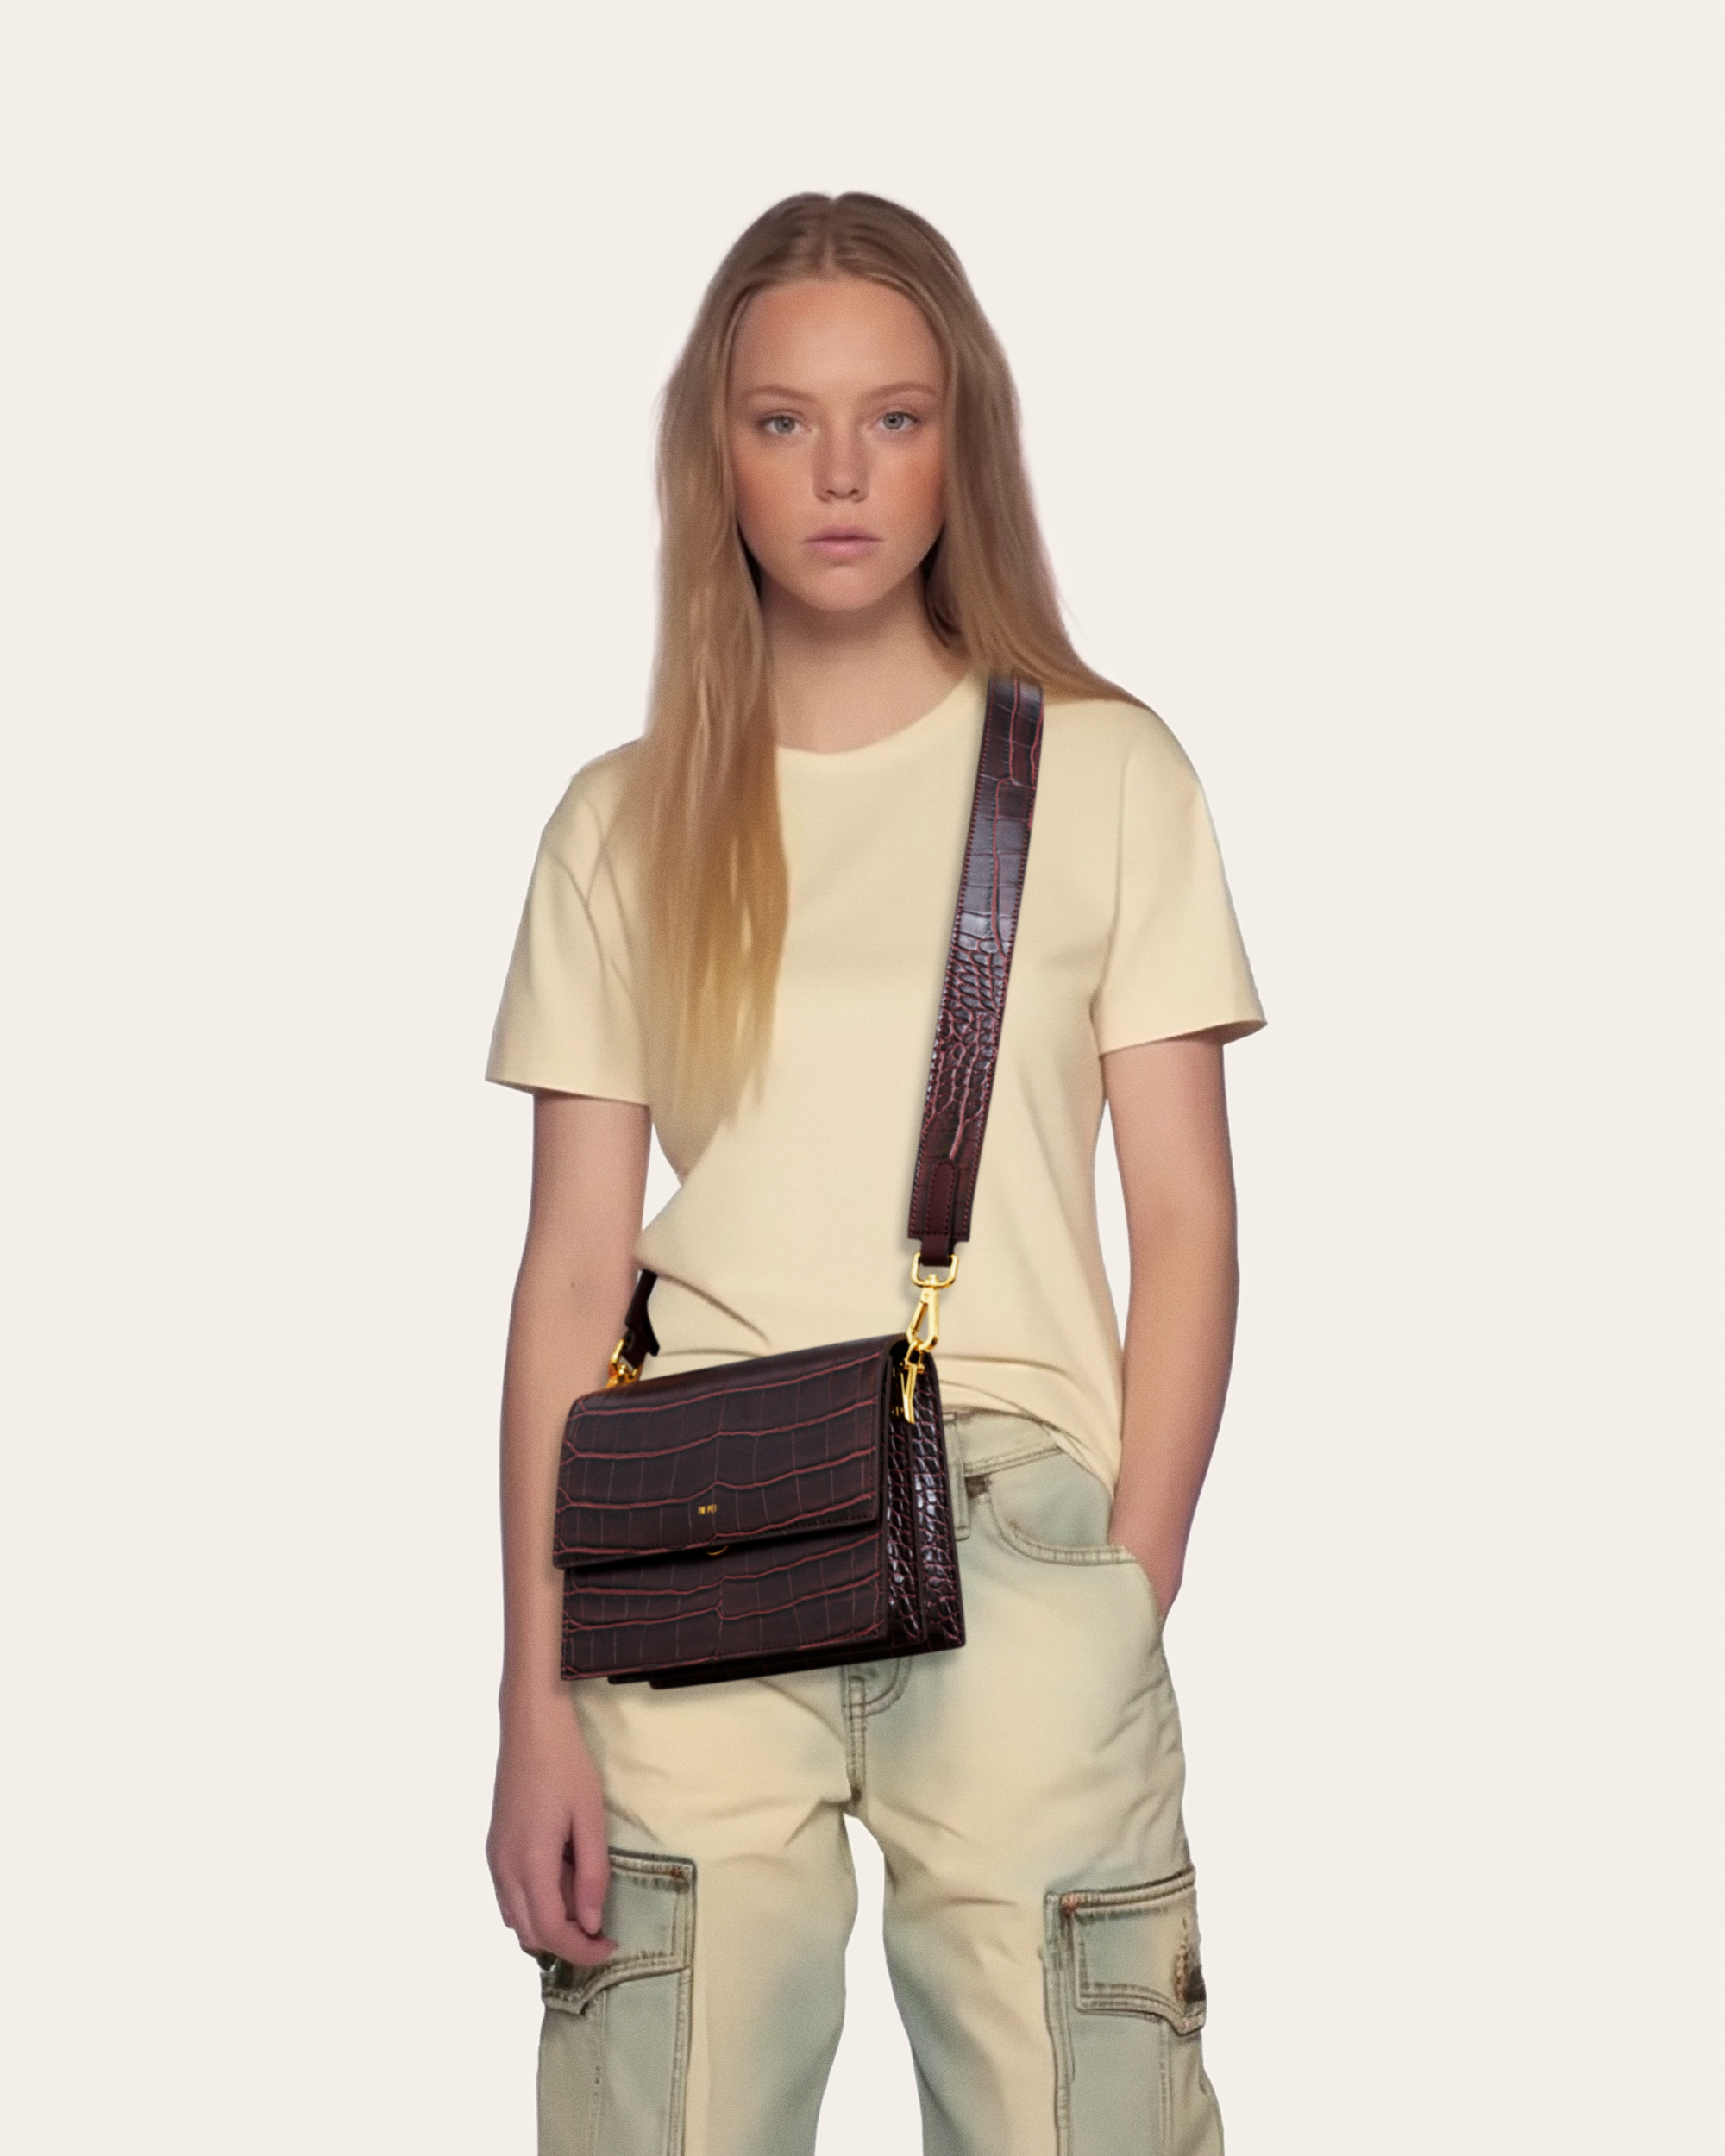 JW PEI Mini Flap Bag  Bags, Vegan leather bag, Fashion bags